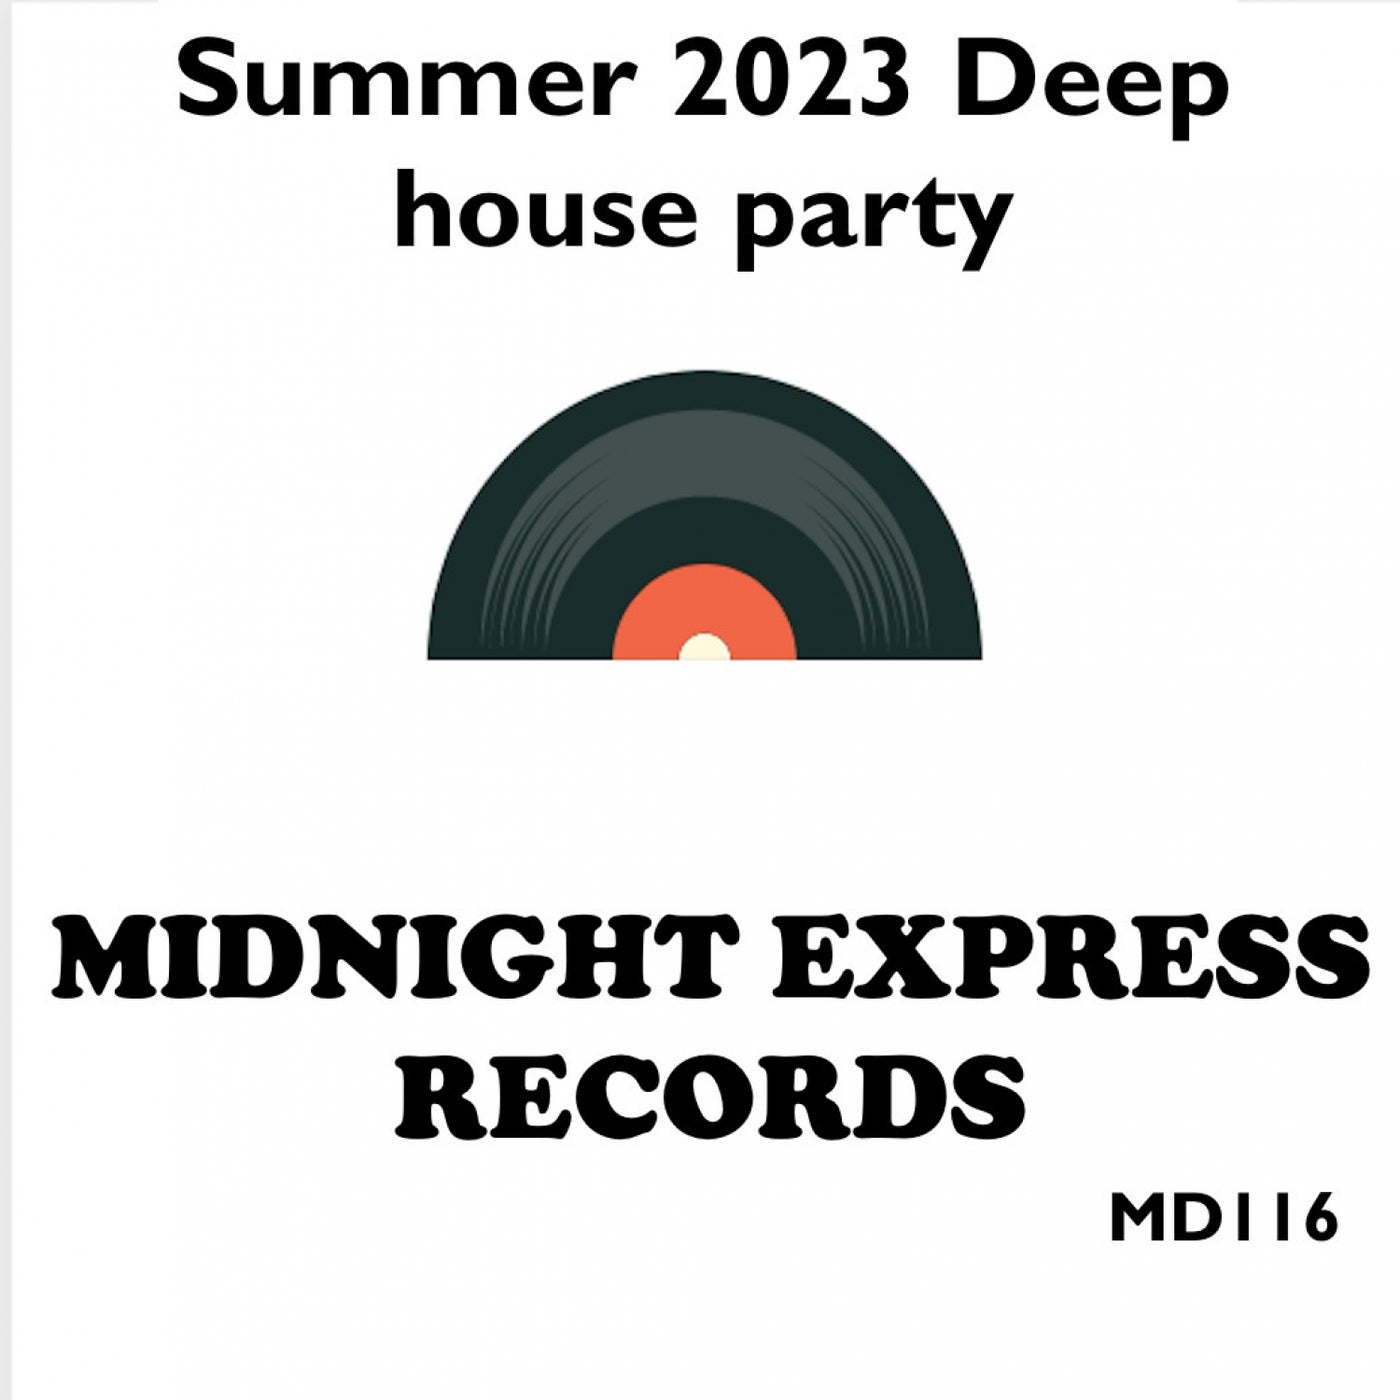 Summer 2023 Deep house party